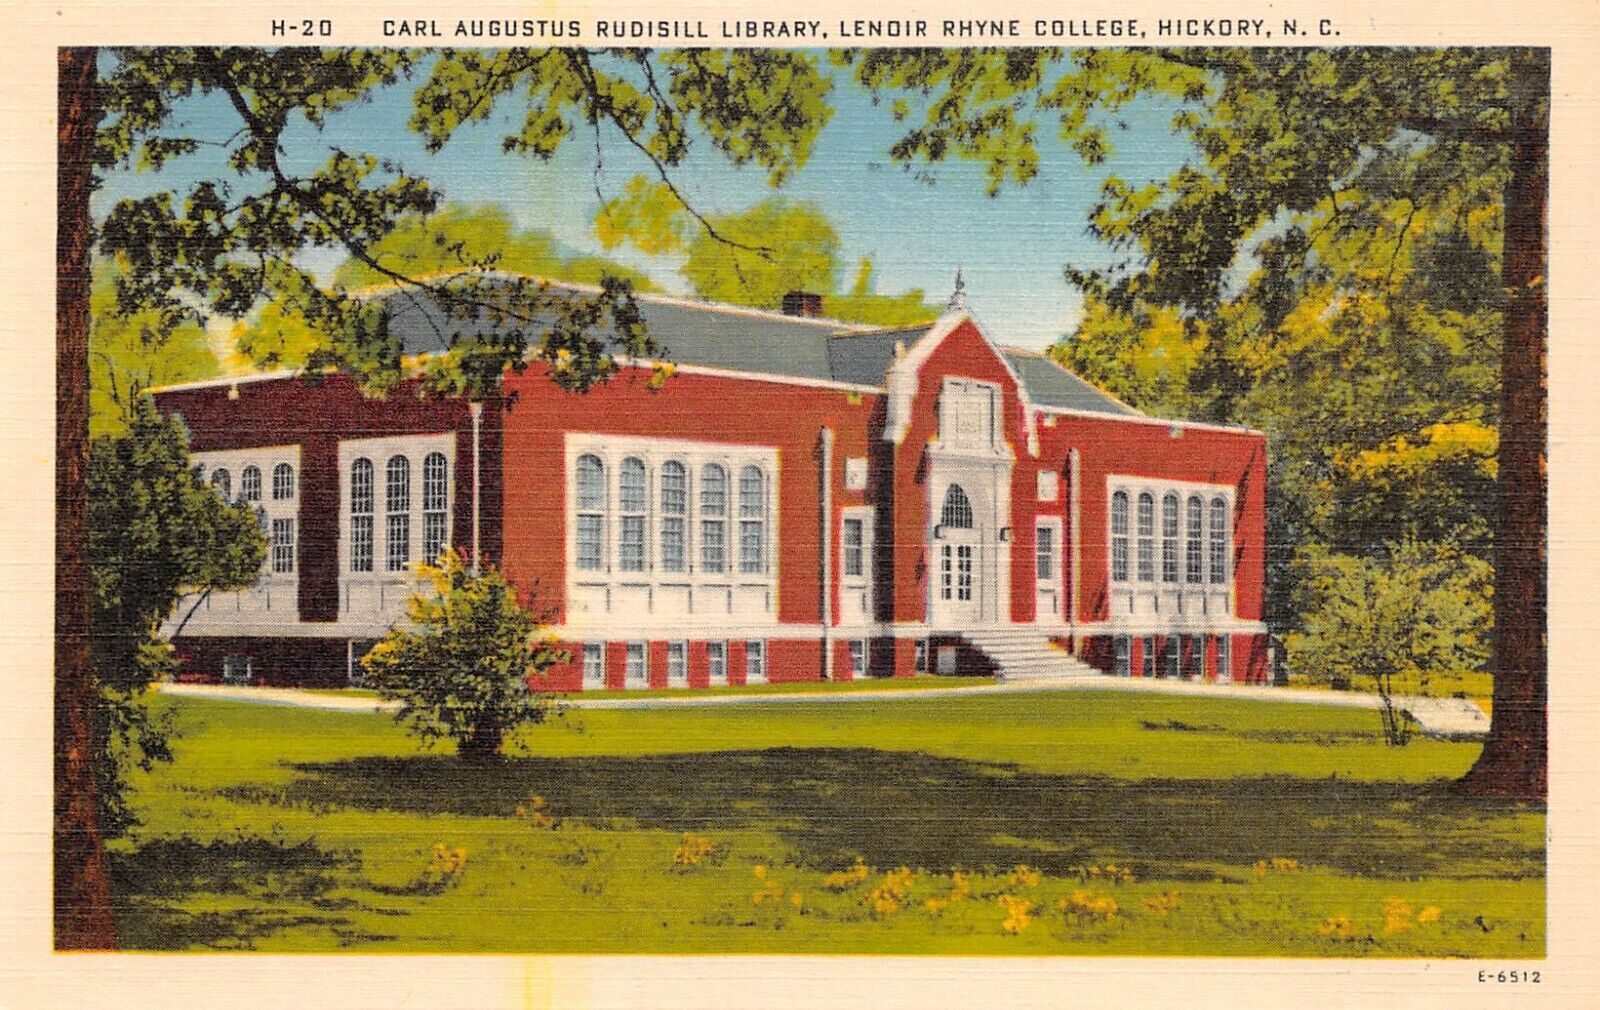 Carl Augustus Rudisill Library Rhyne College North Carolina 1940s Postcard